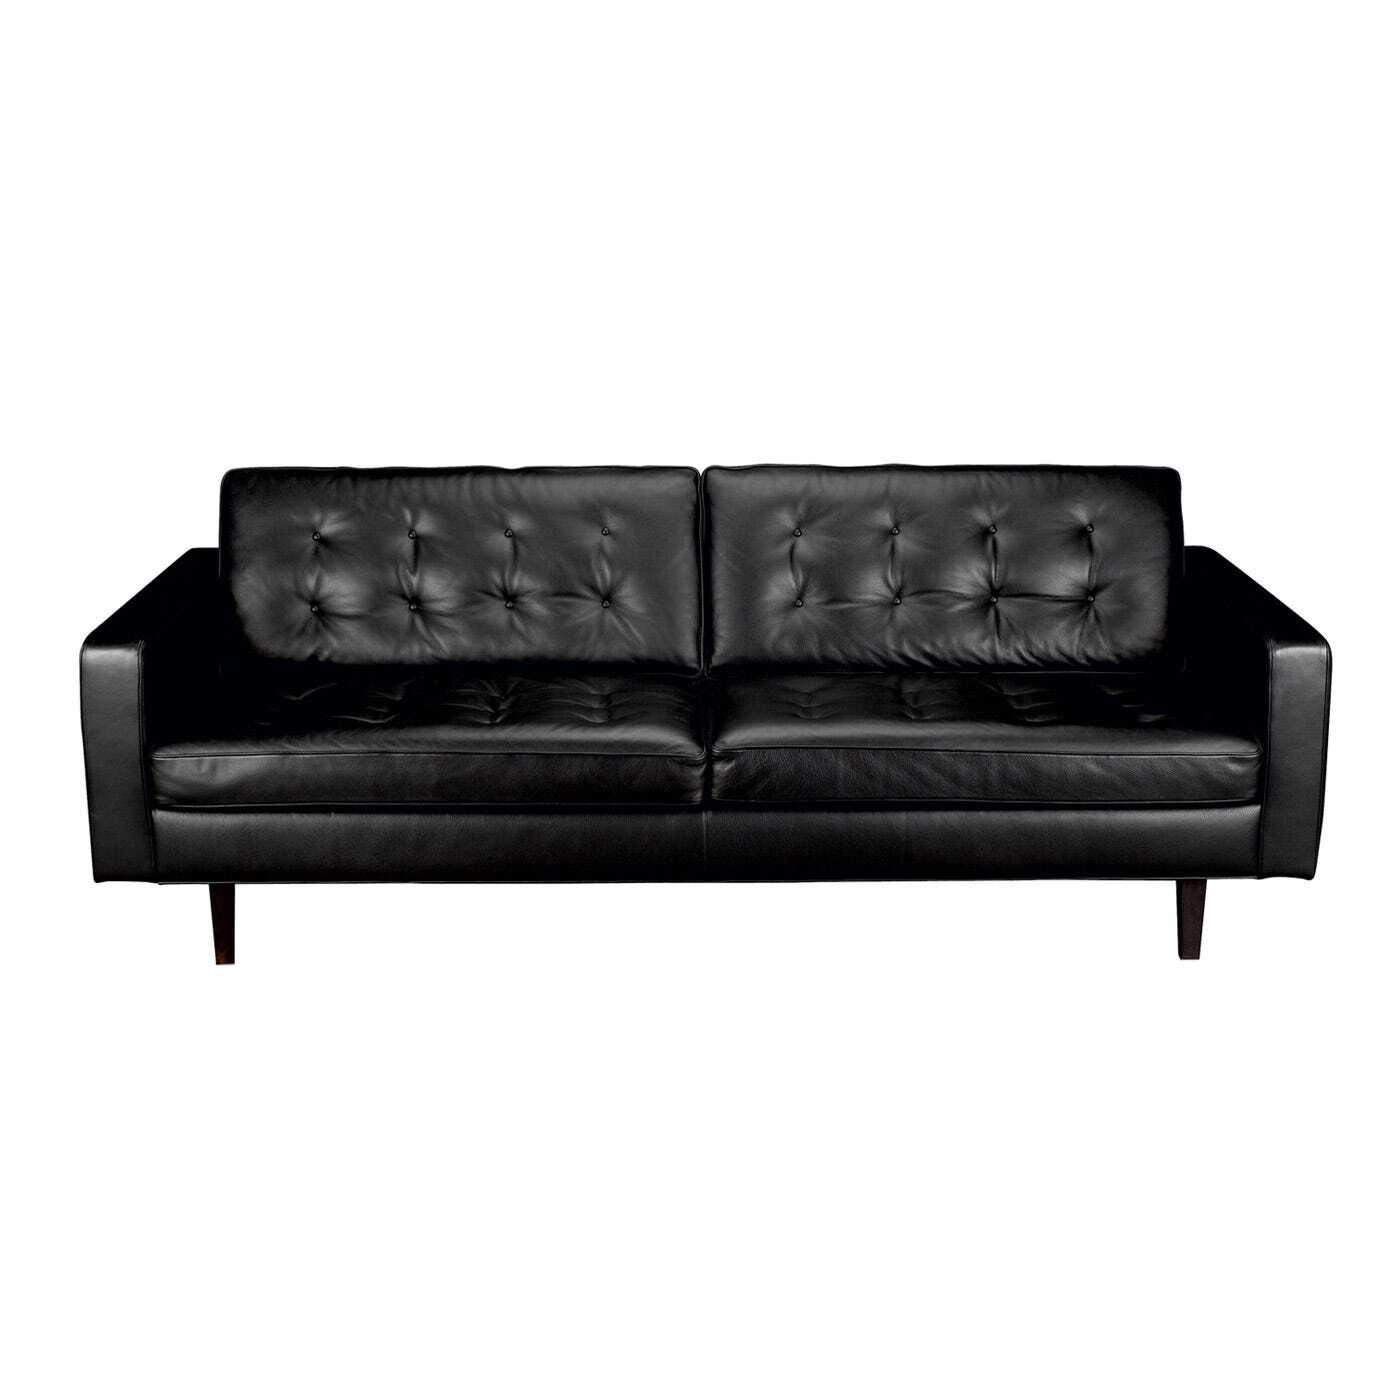 Heal's Hepburn 4 Seater Sofa In Stonewash Leather Black